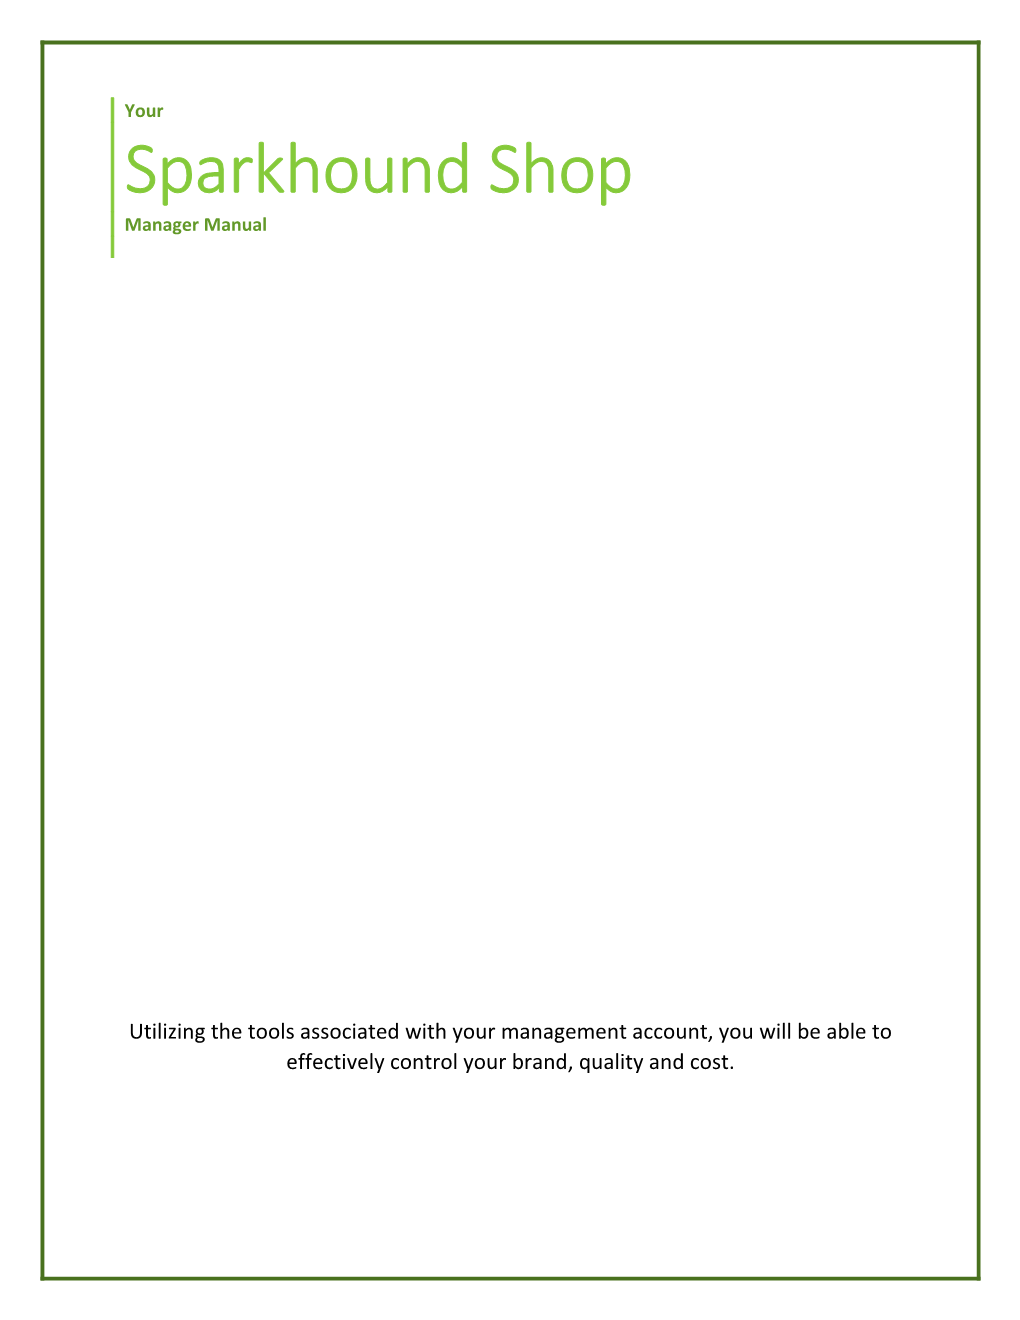 Sparkhound Shop Manager Manual